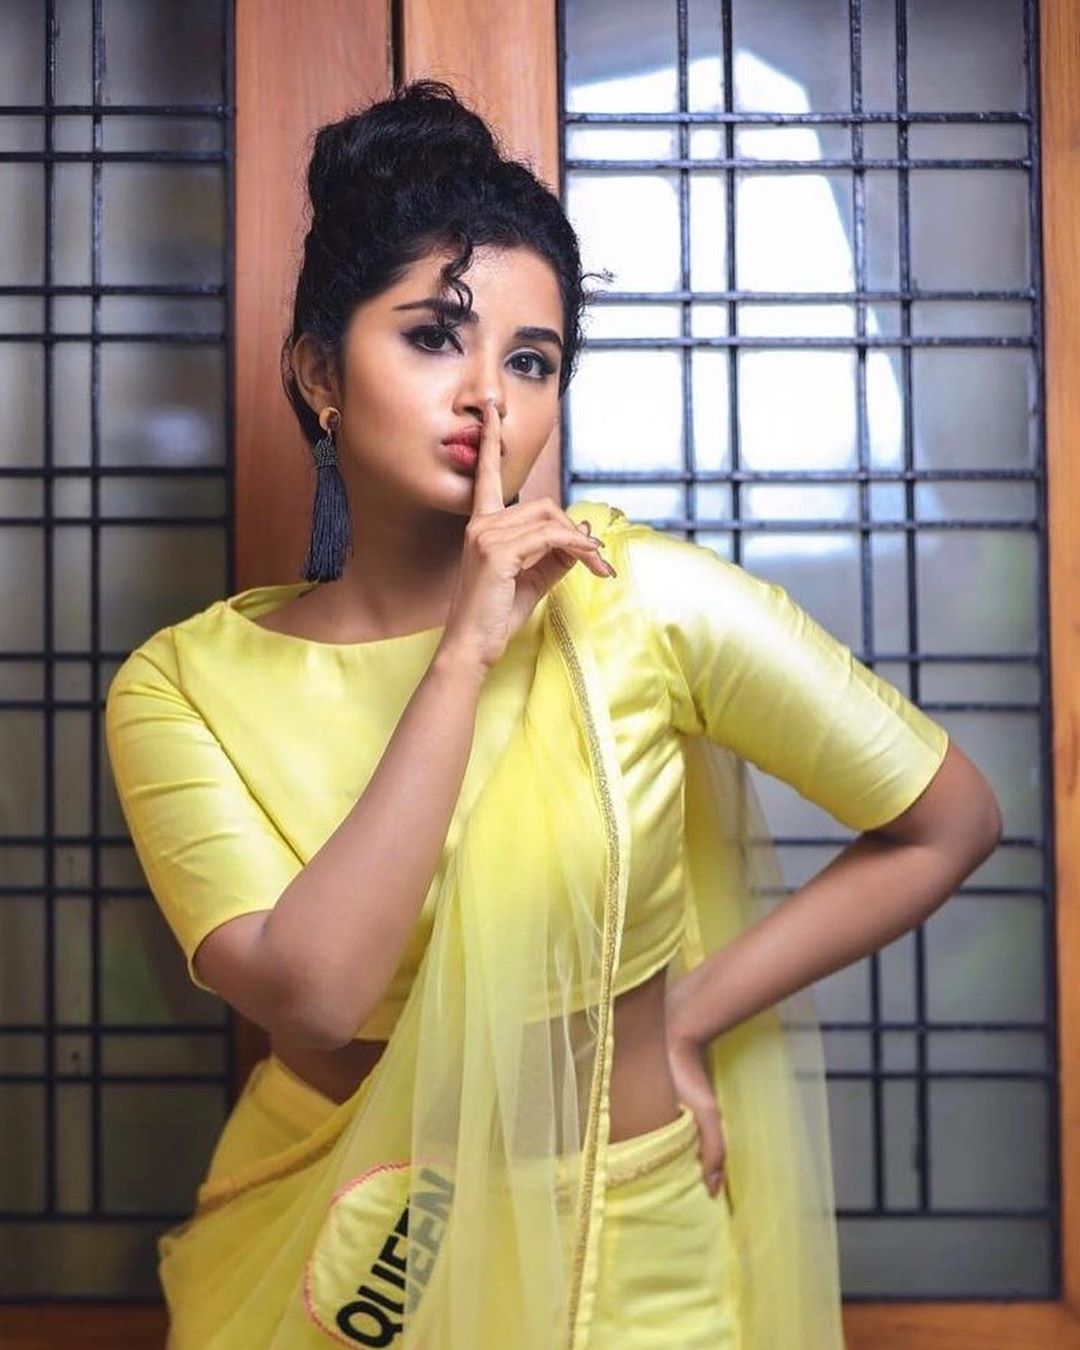 Anupama Parameswaran Shows Her Hot Curves In Side View